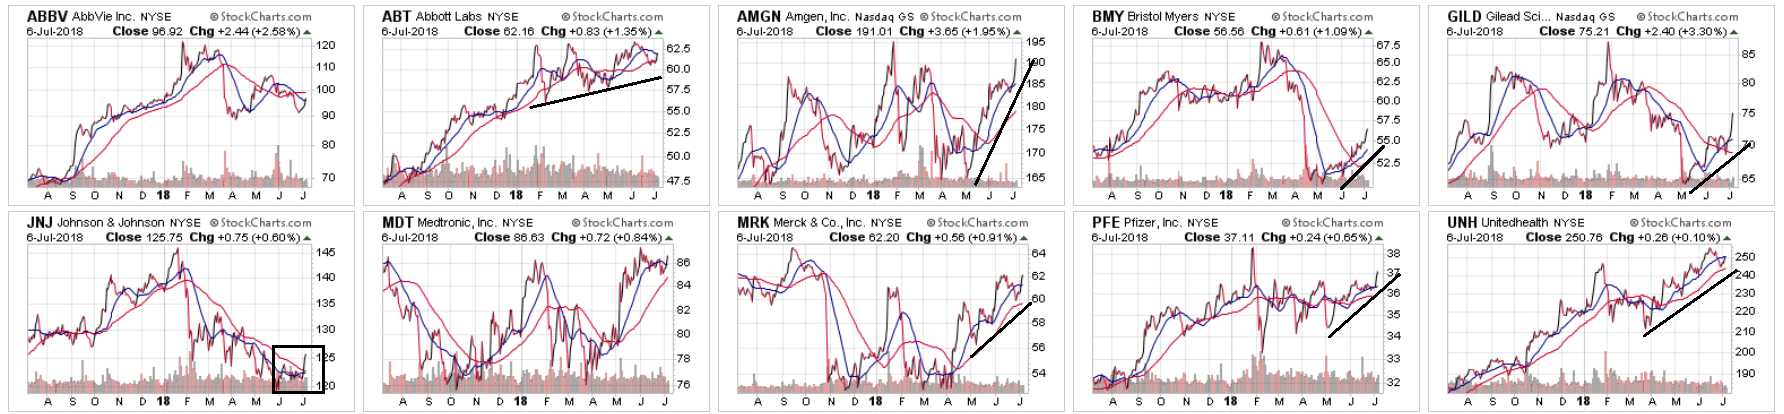 Stocks Chart 2